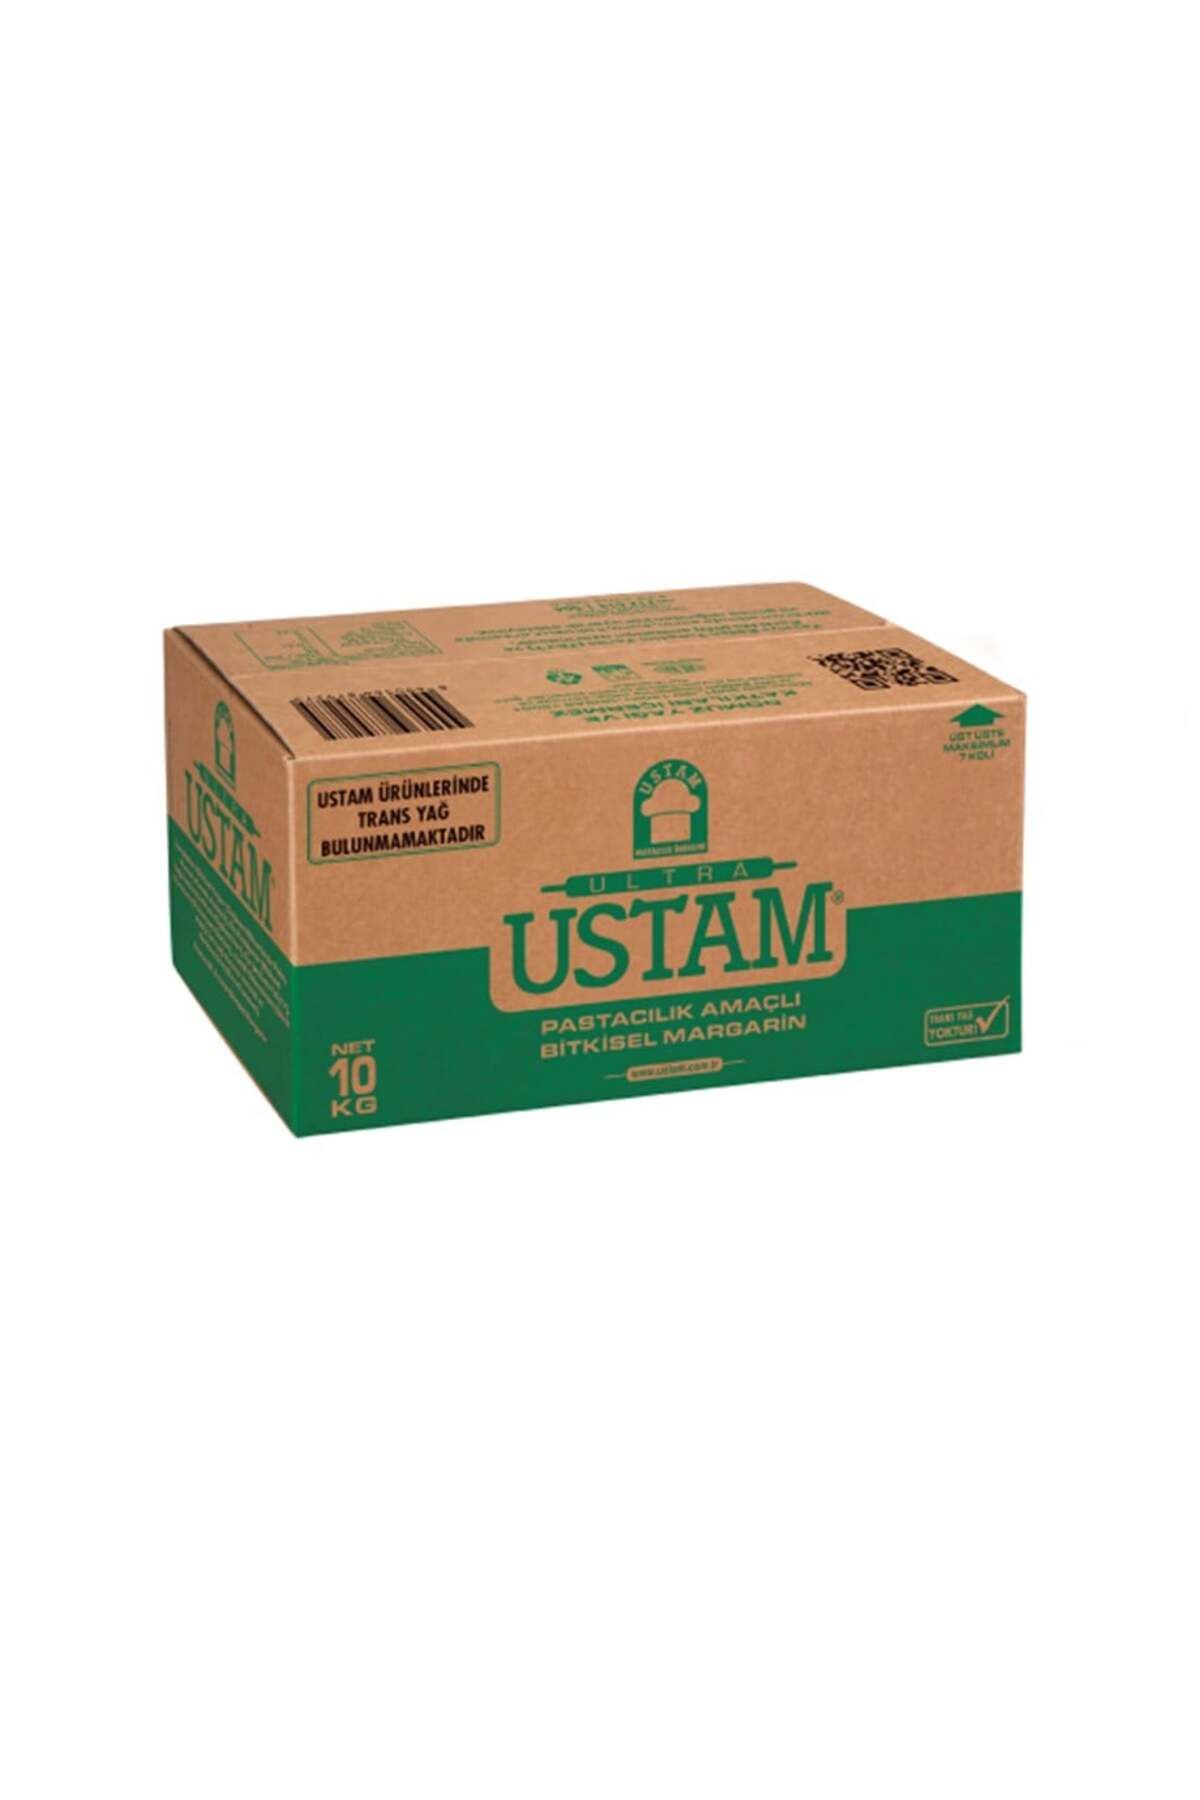 USTAM Ultra 10 Kg